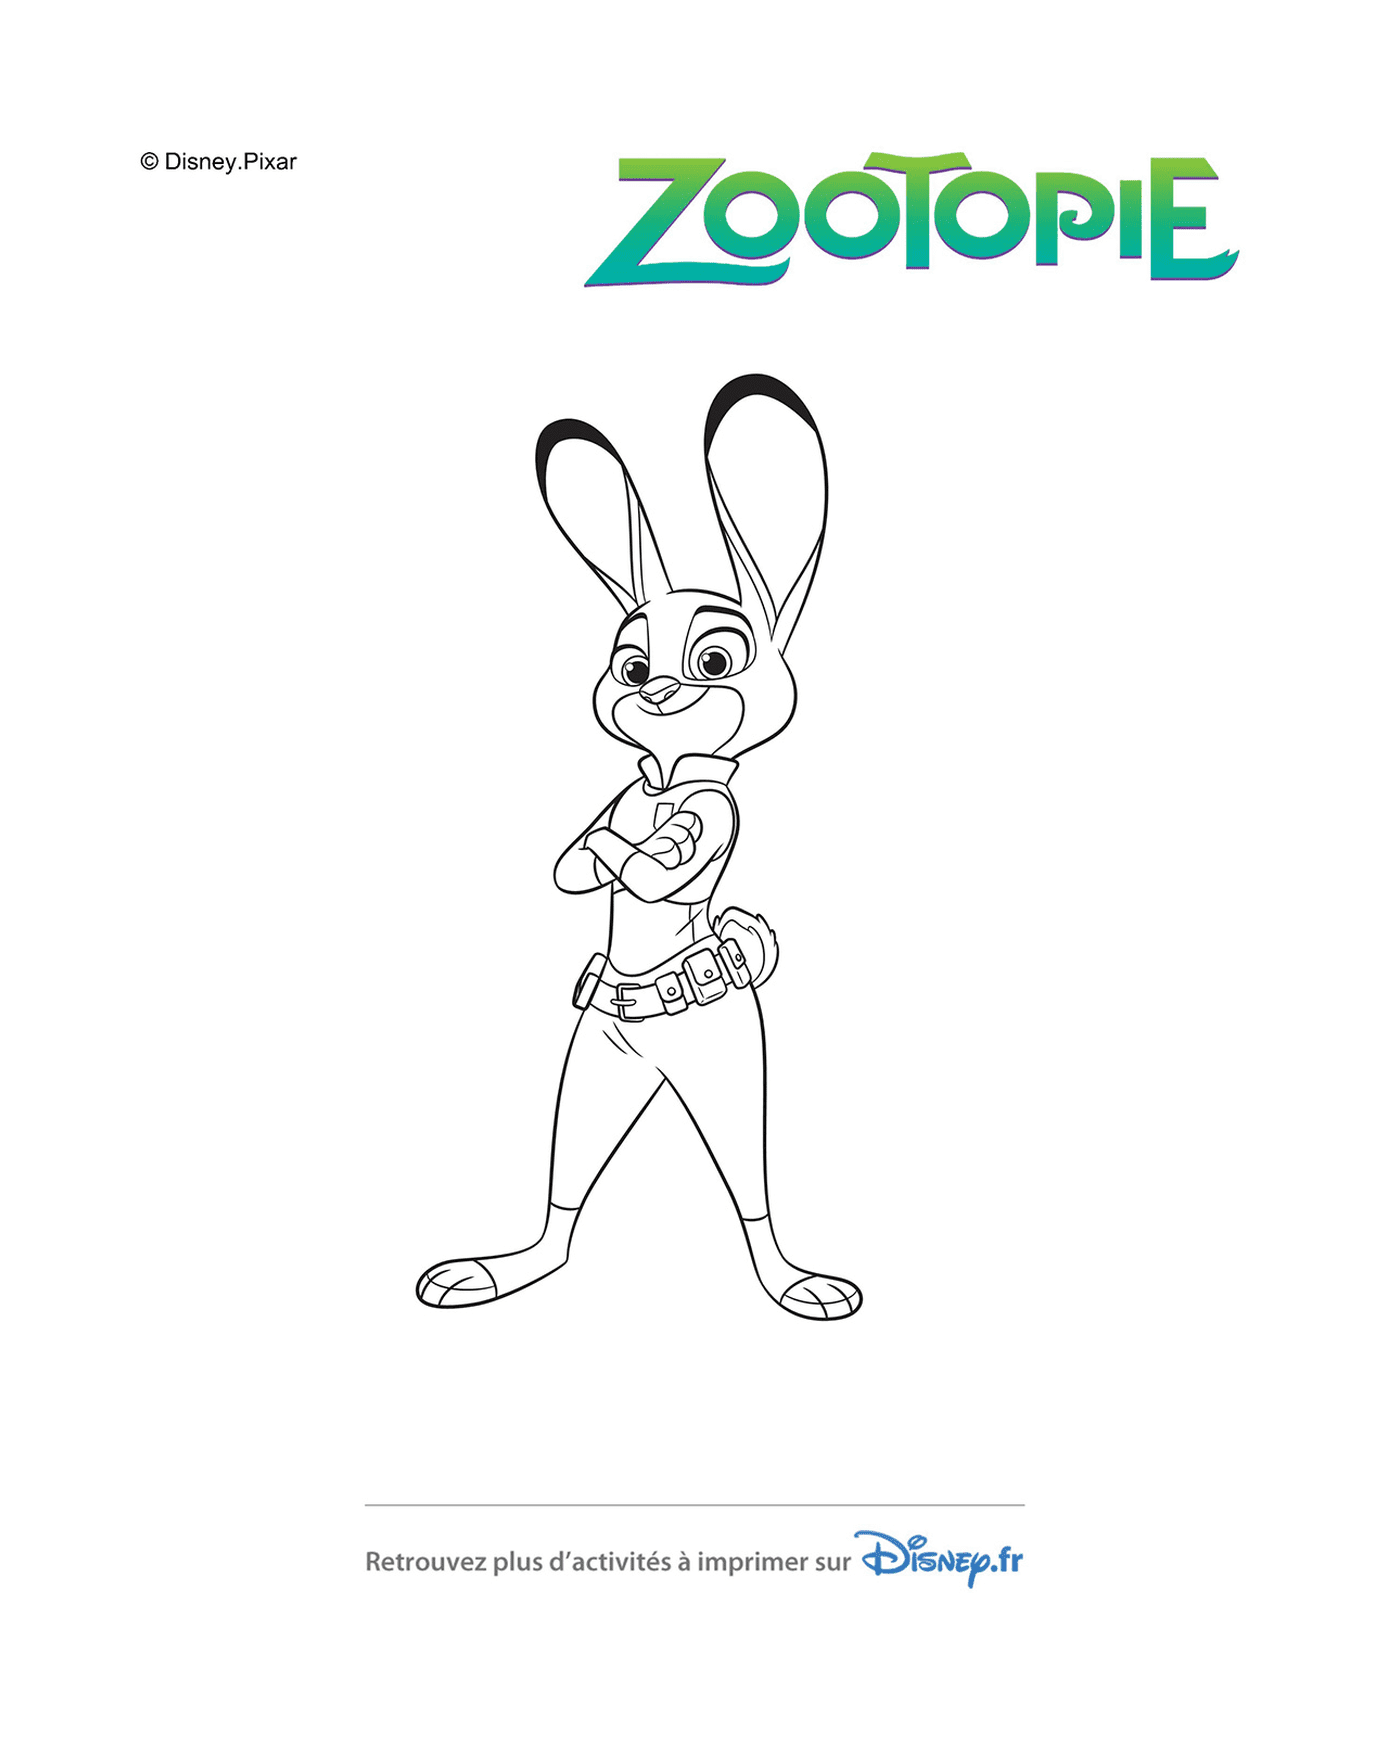  Judy Hopps, Disney Zootopies unerschrockene Polizei 